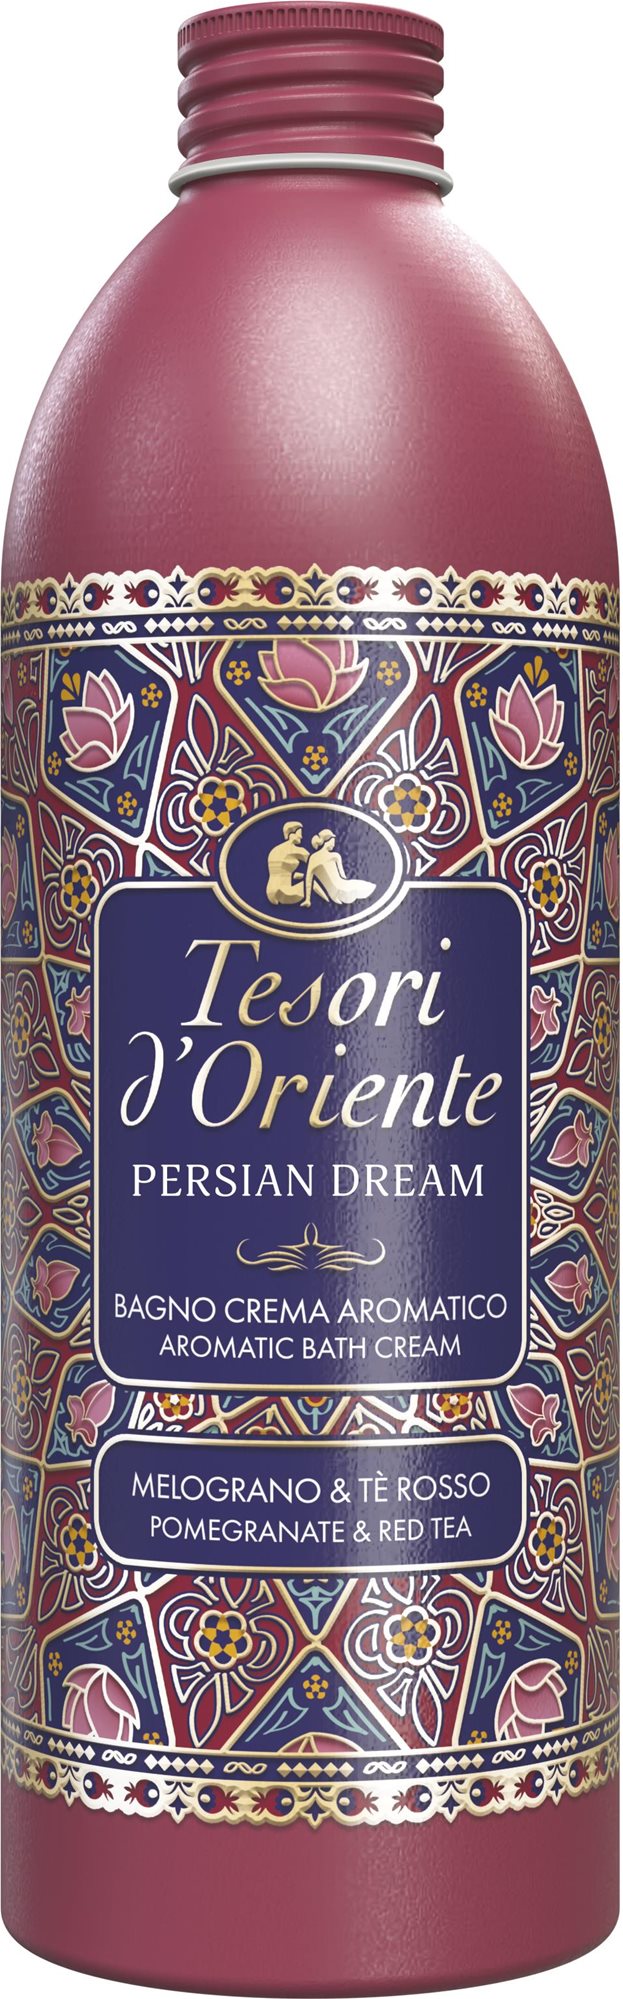 TESORI D'ORIENTE Persian Dream 500 ml